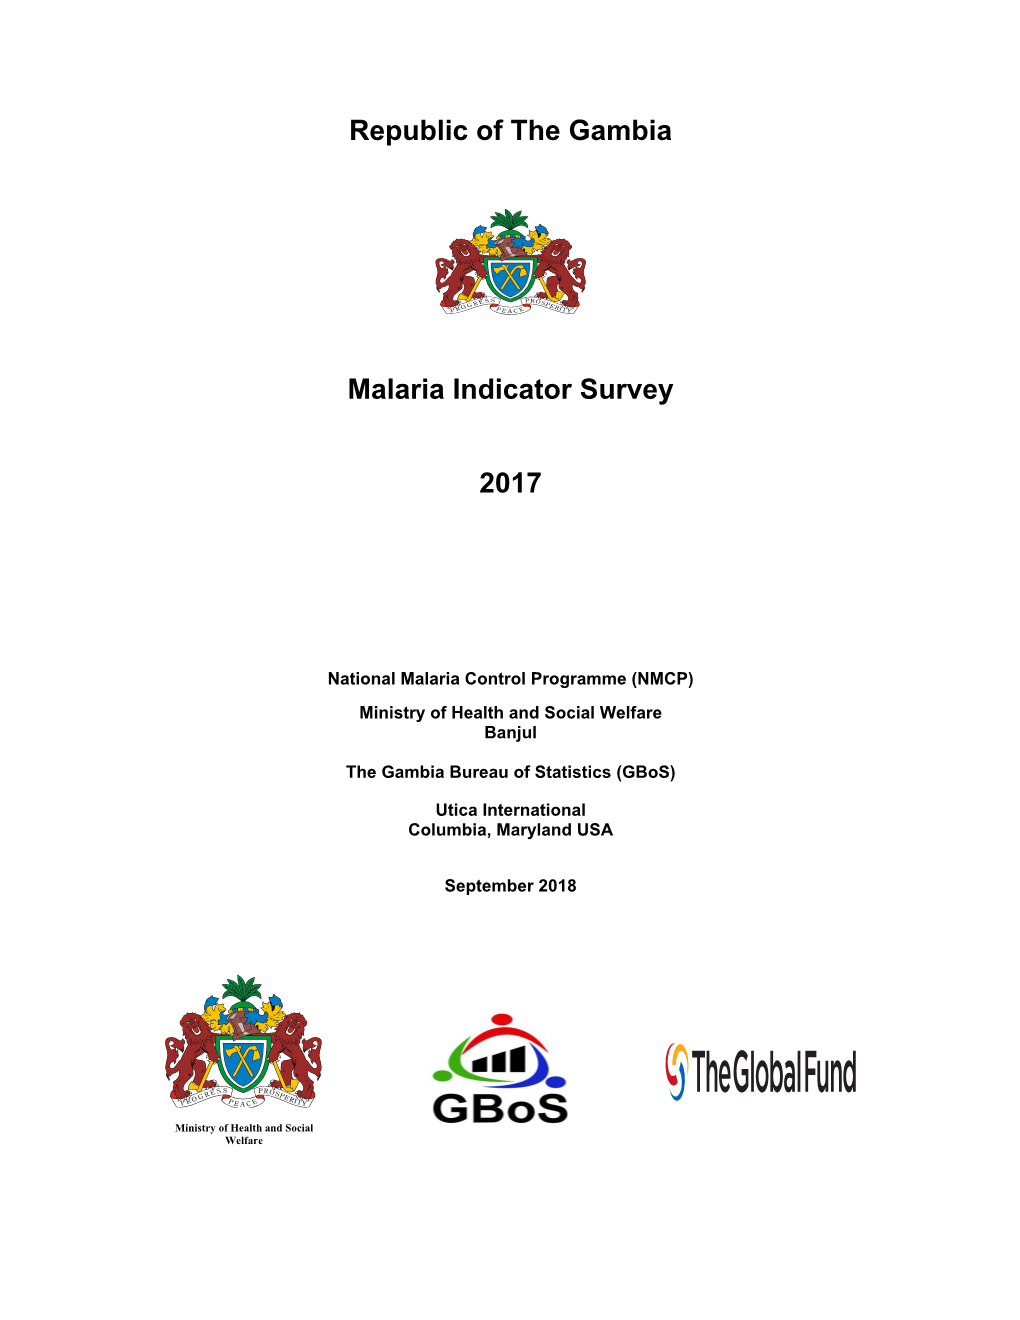 Republic of the Gambia Malaria Indicator Survey 2017